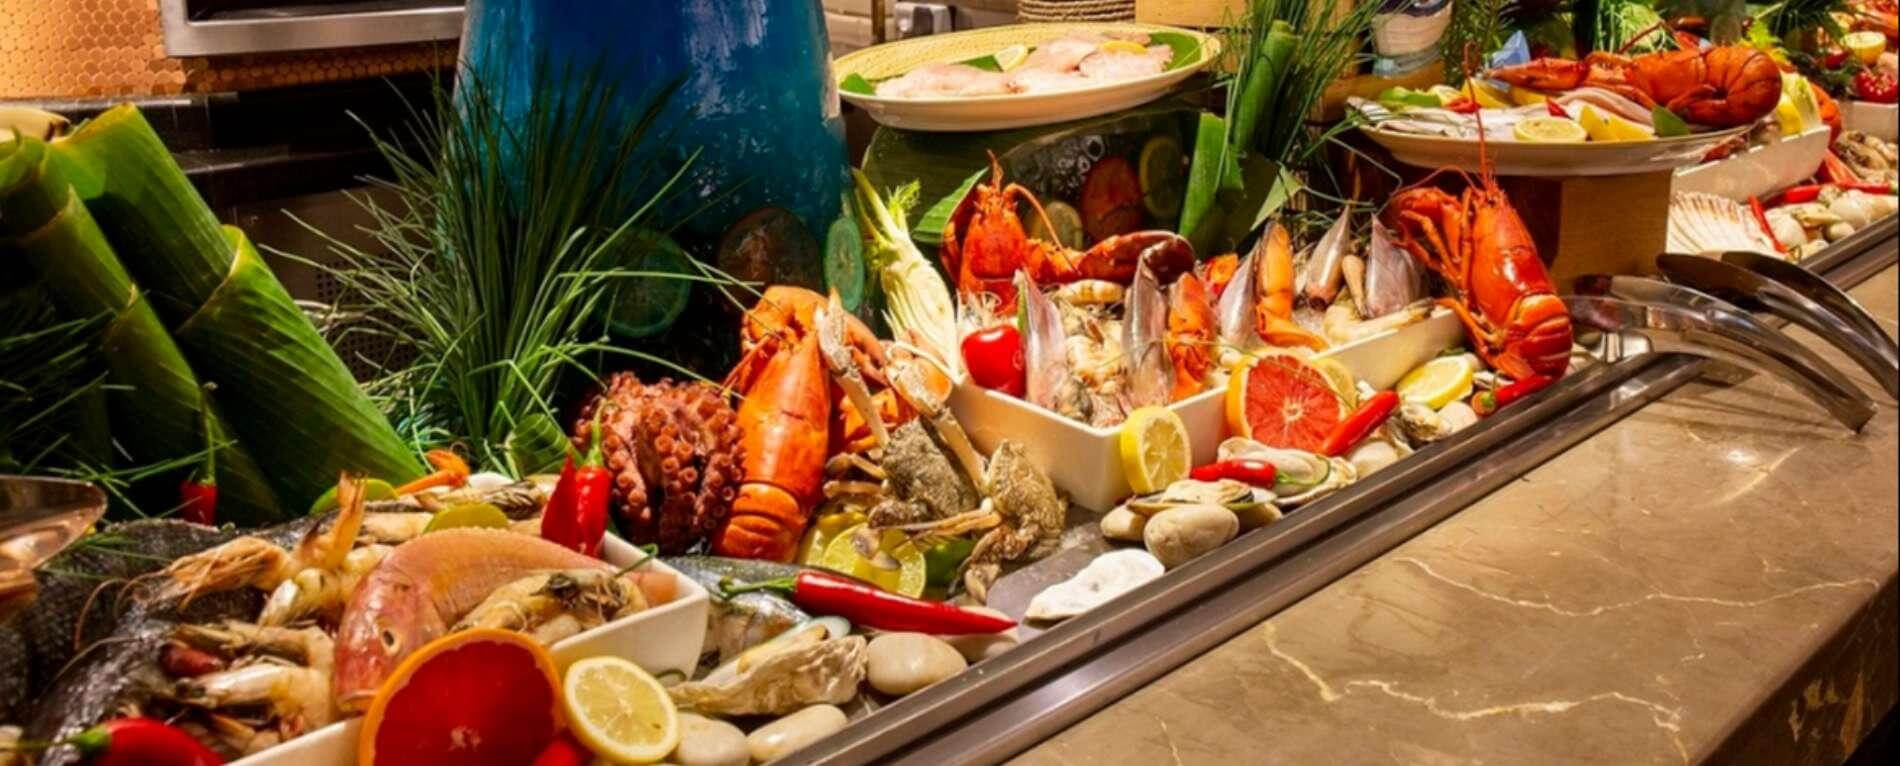 Seafood Buffet at Crowne Plaza Bahrain - Visit Bahrain